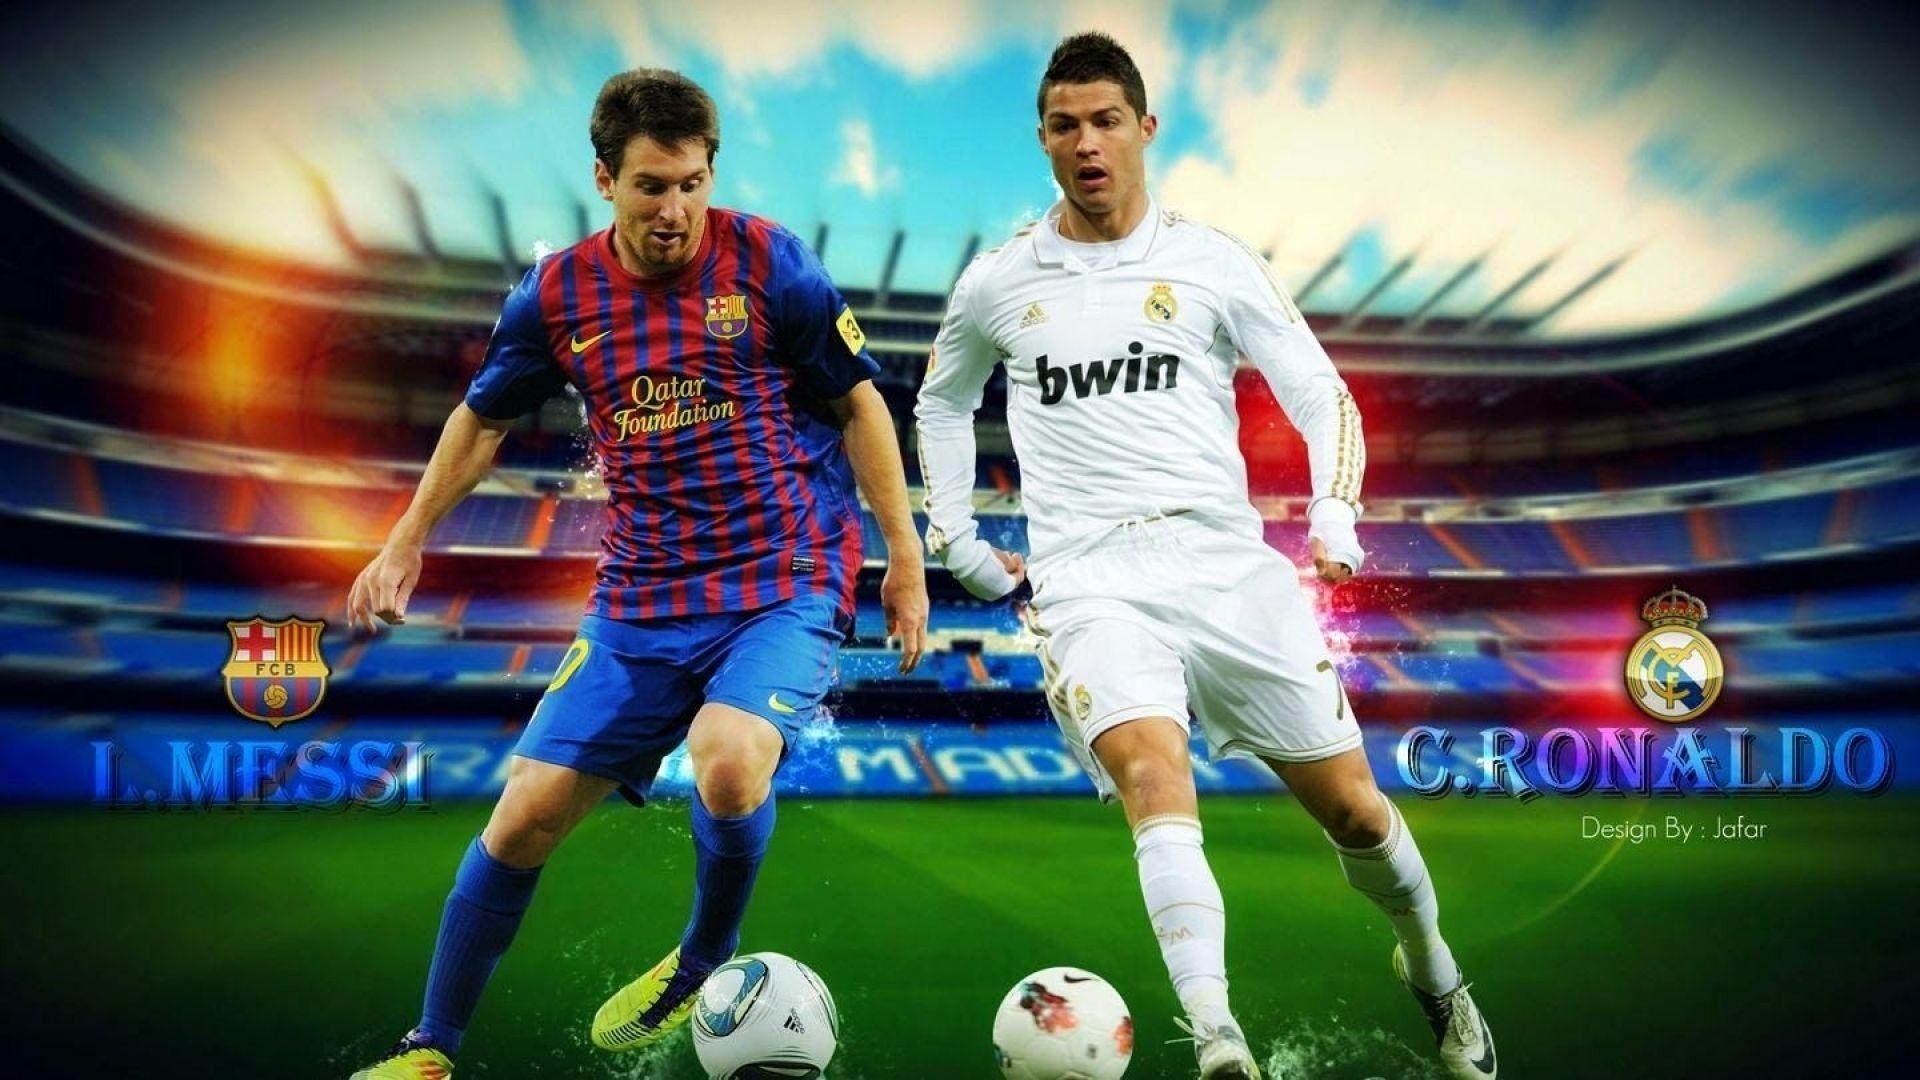 Messi and Ronaldo 4K Wallpapers - Top Free Messi and Ronaldo 4K ...